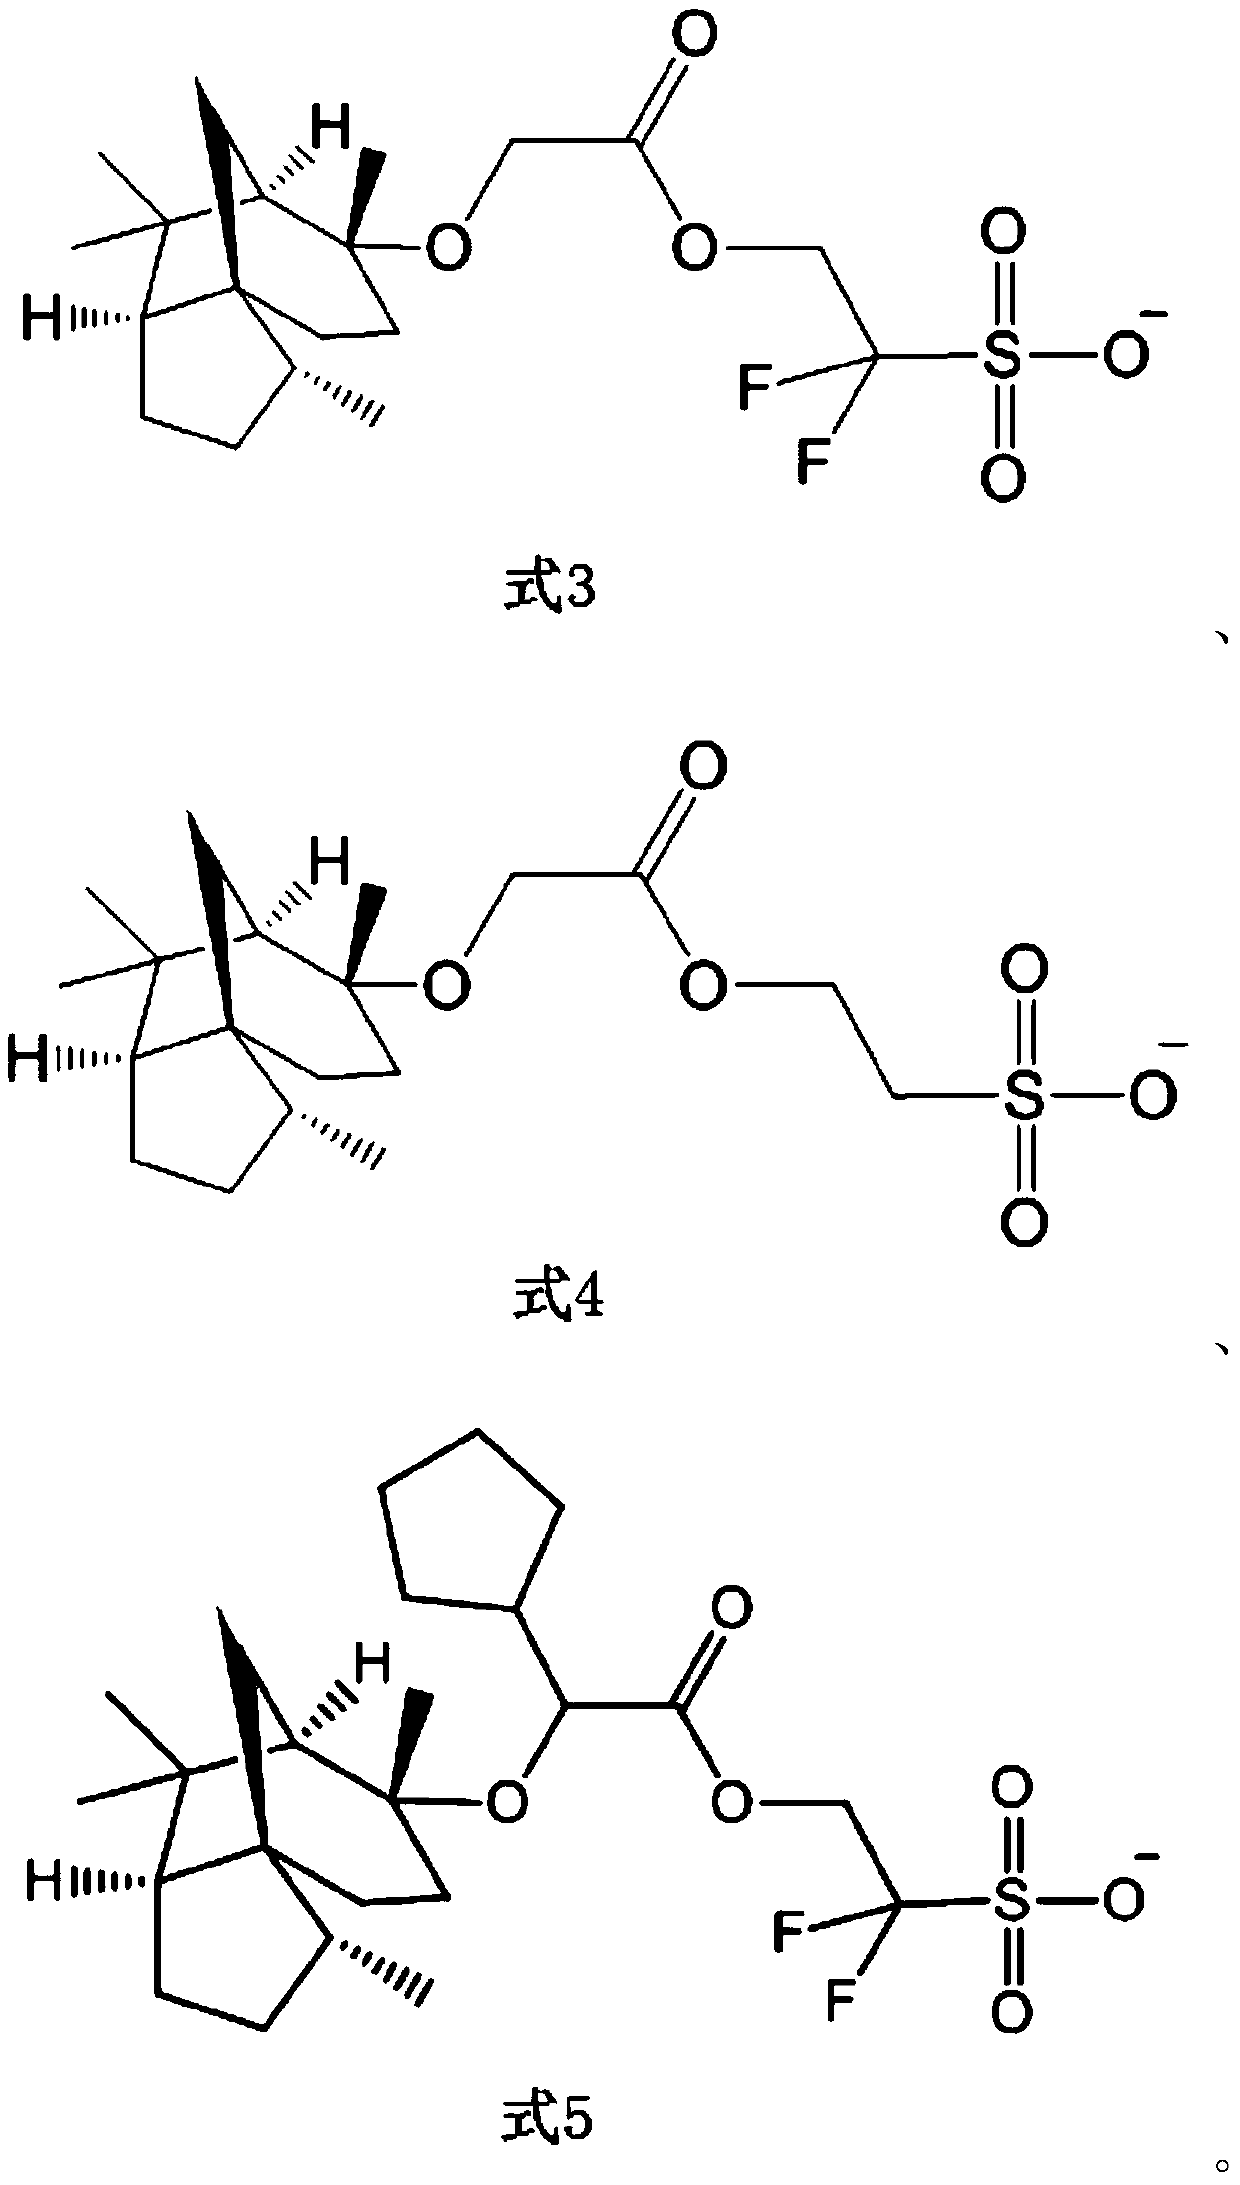 Sulfonium onium salt photoacid generator containing cedrol structure and preparation method thereof